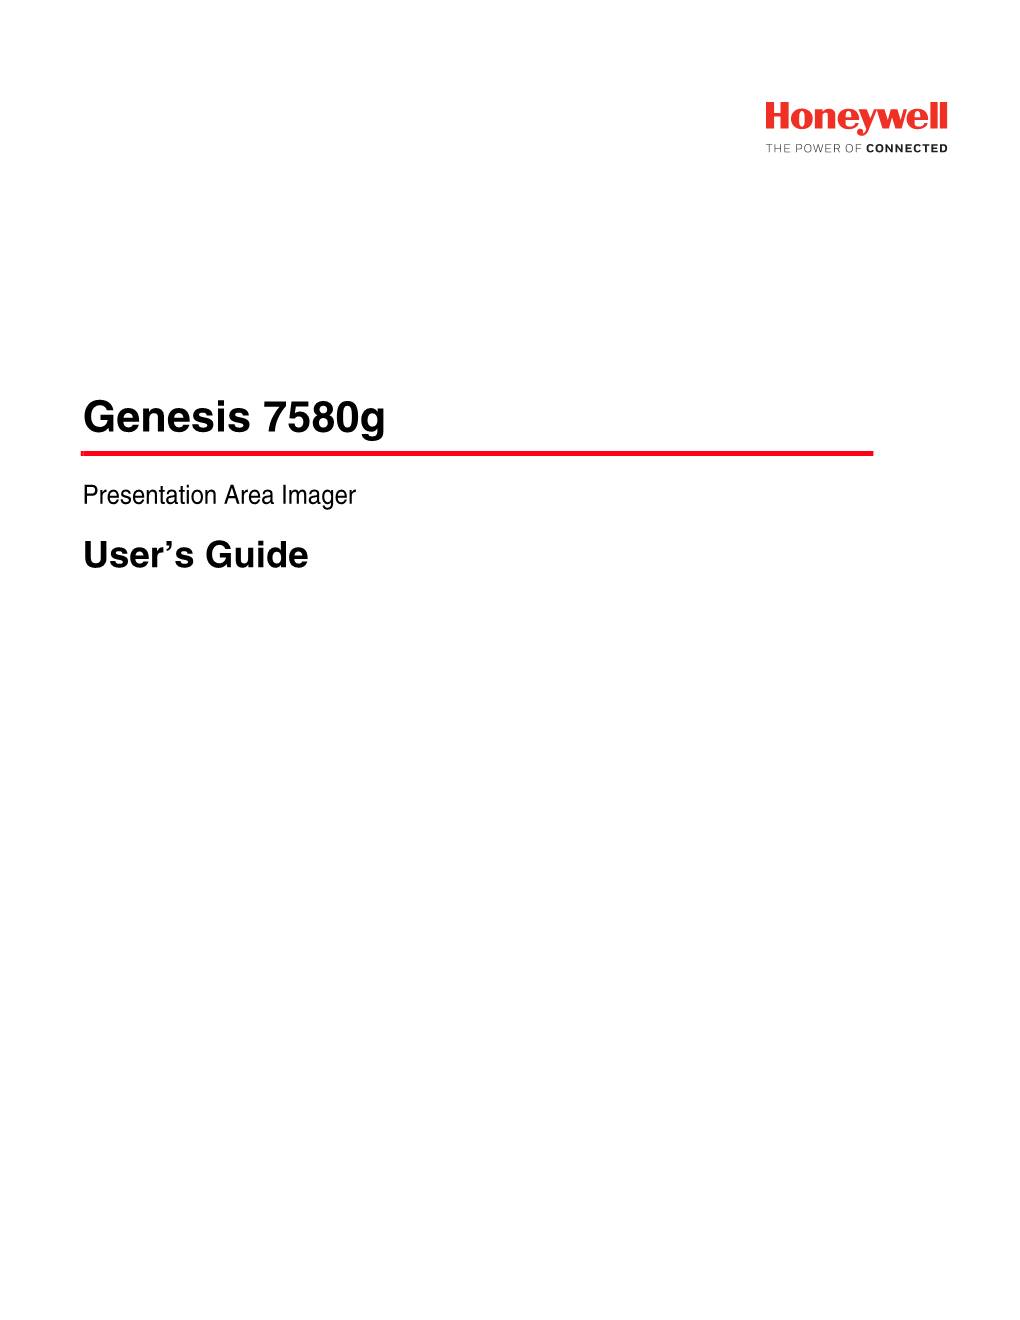 Genesis 7580G Area-Imaging Scanner User's Guide